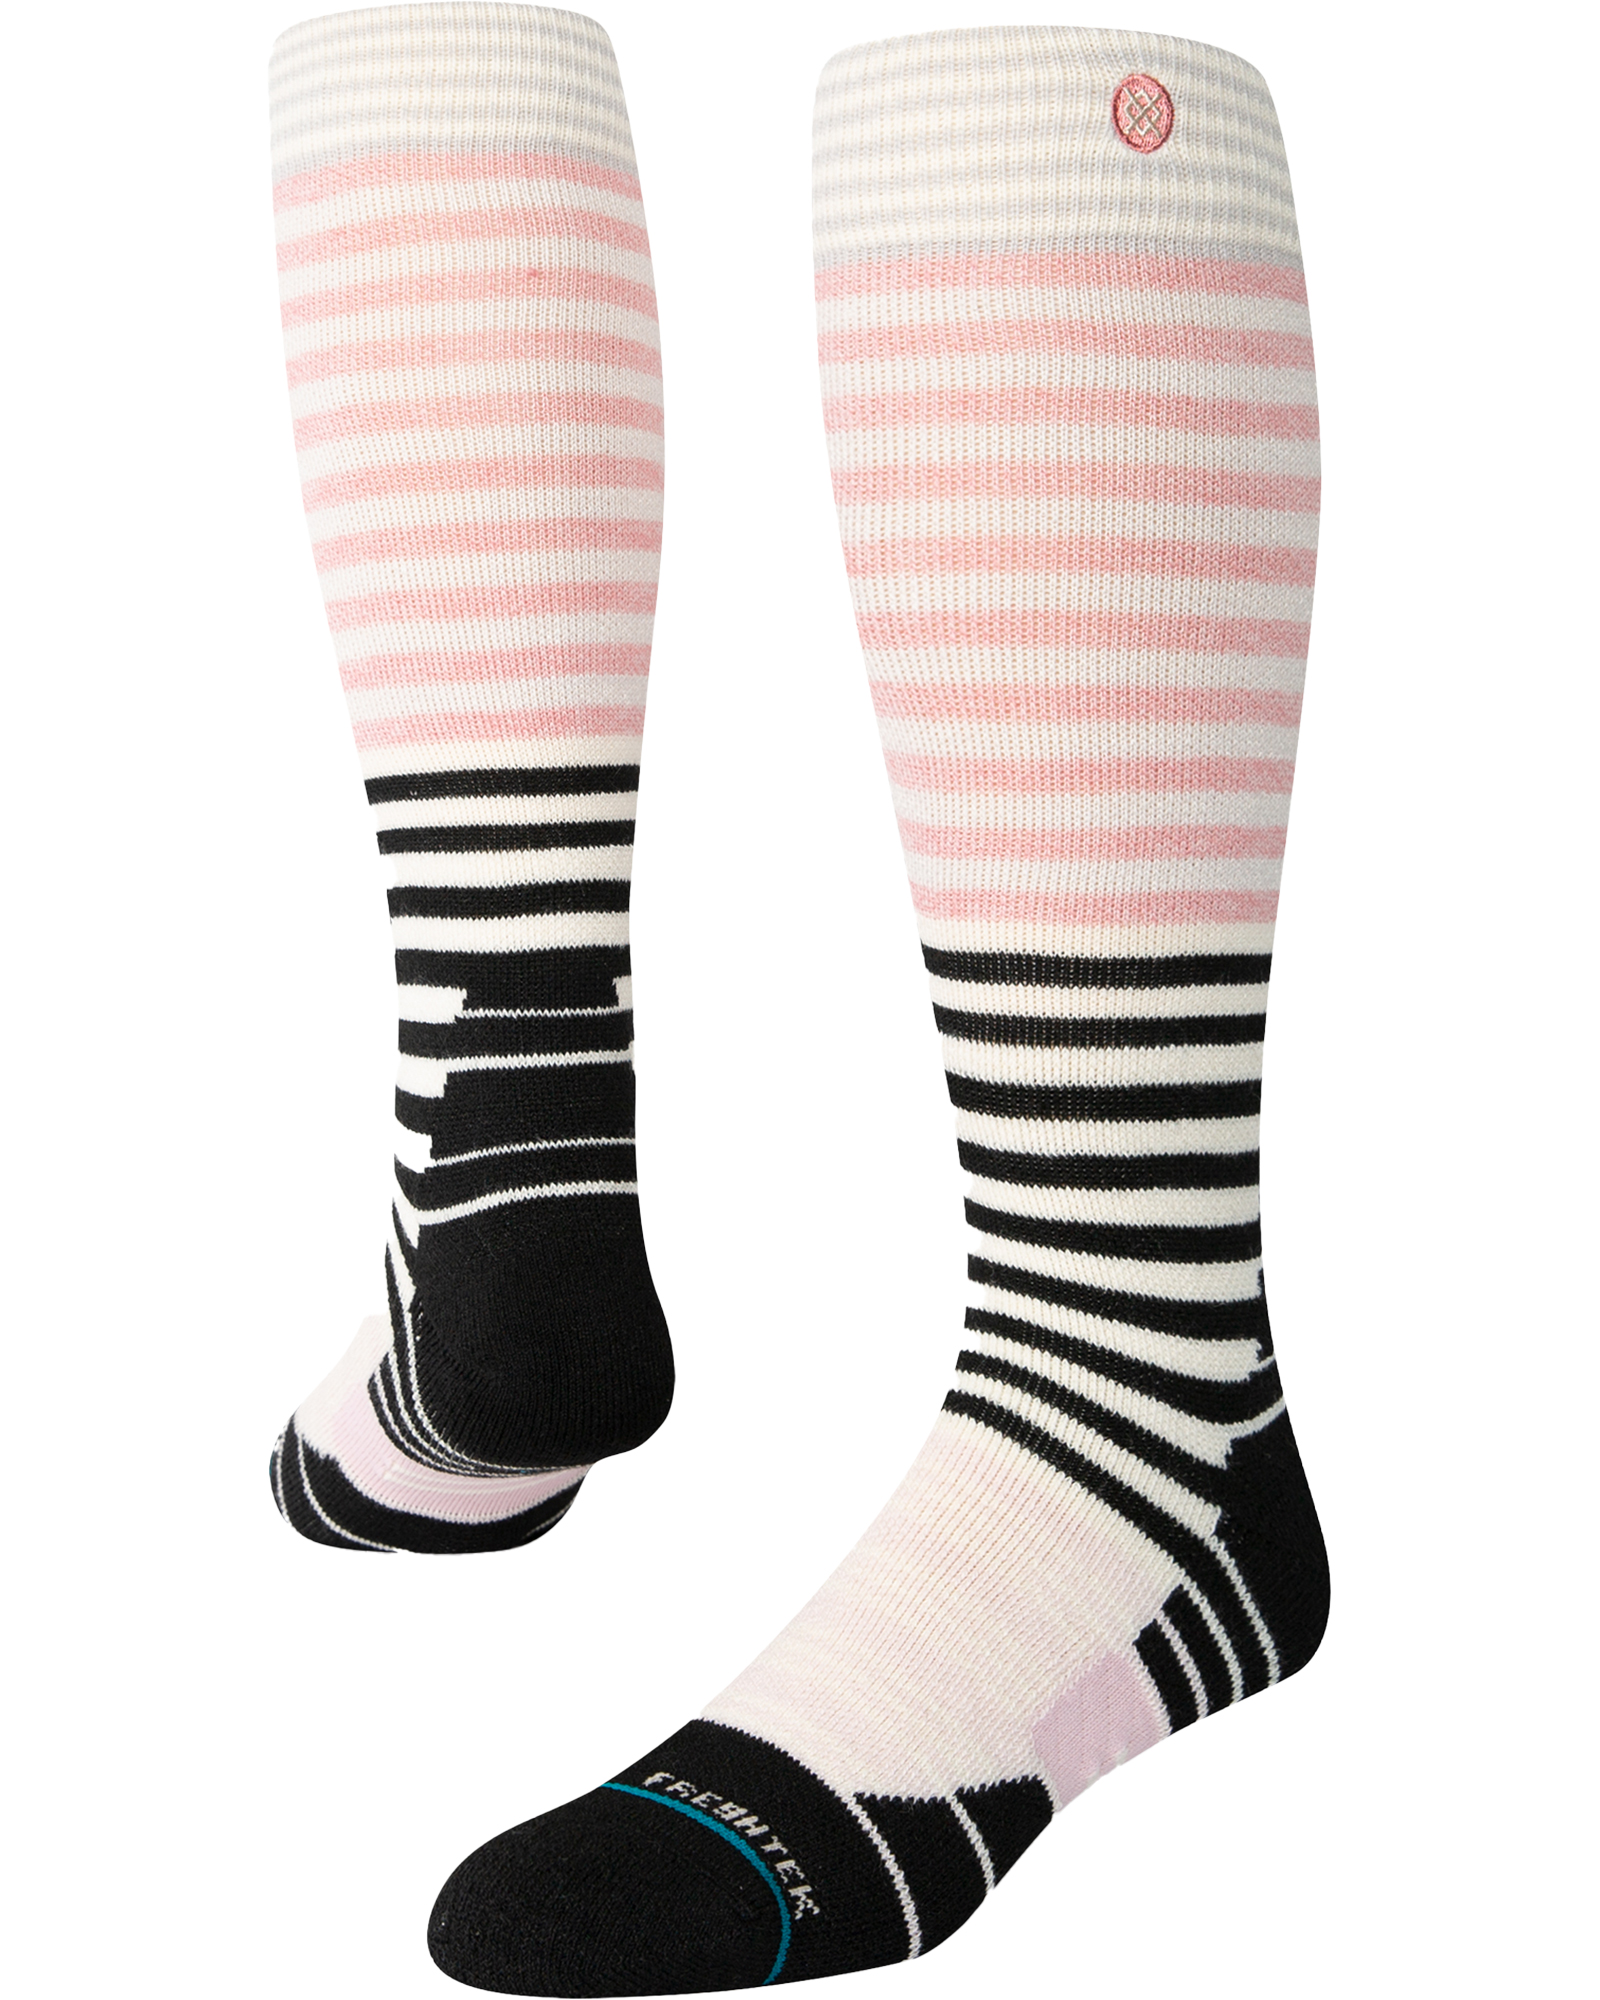 Stance Women's Diatonic Snow Socks